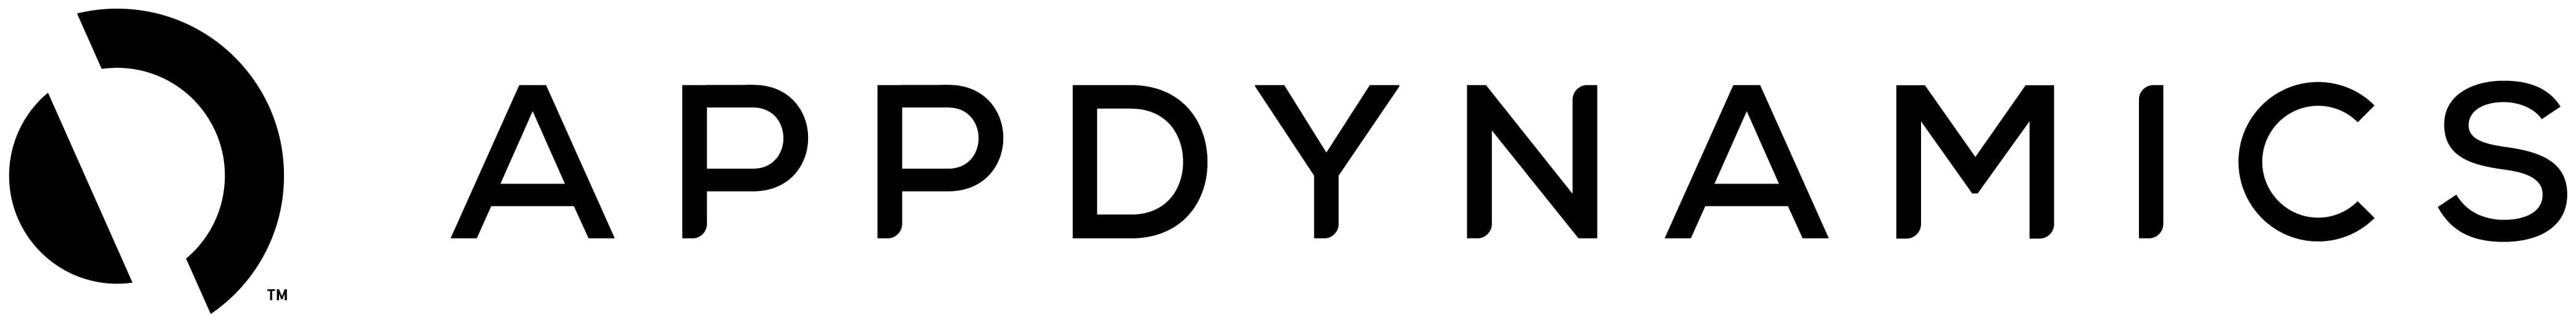 AppDynamics logo